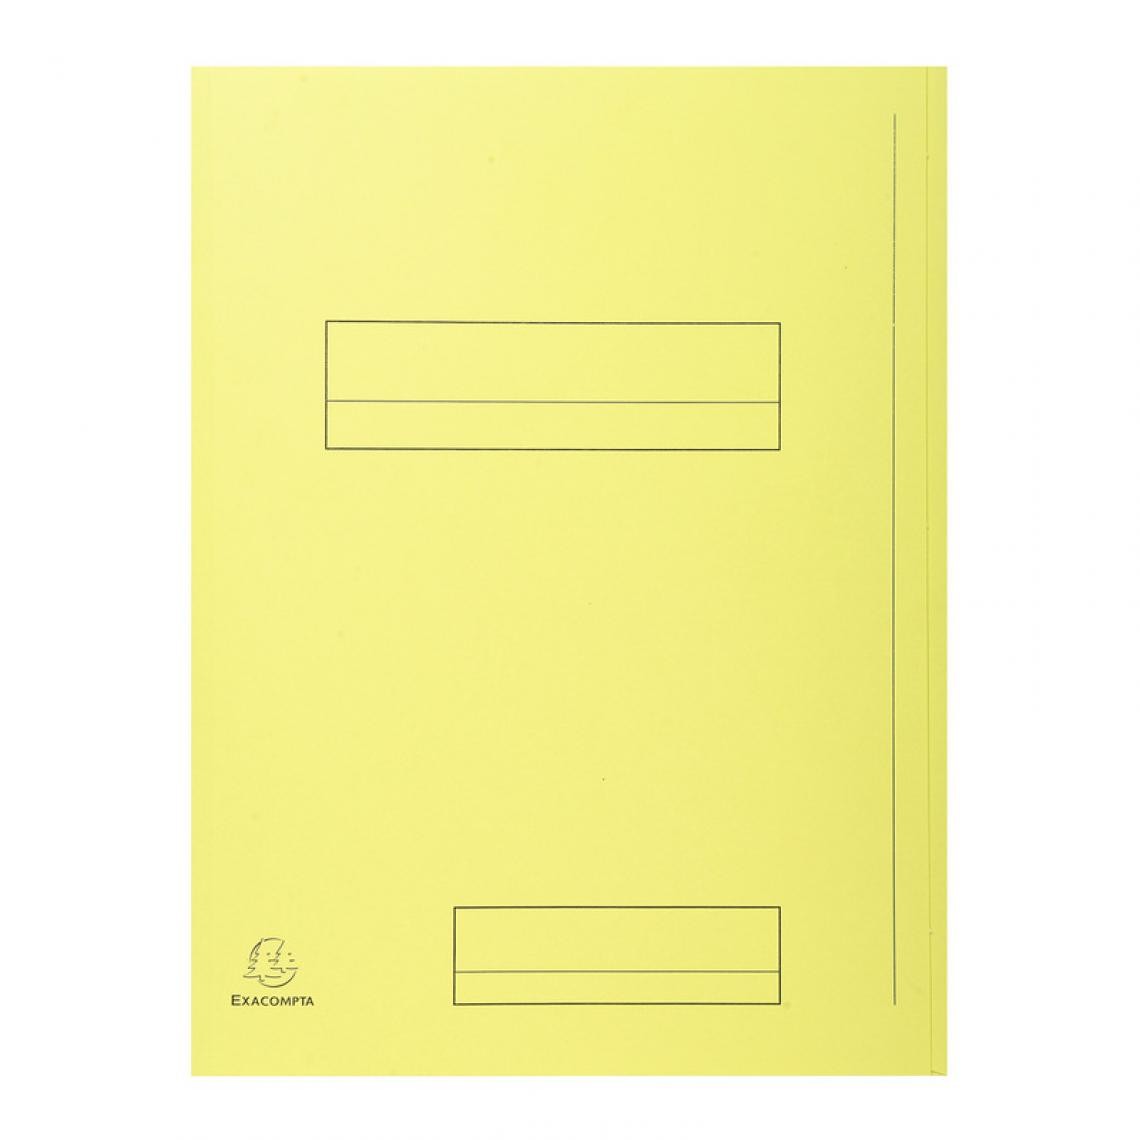 Exacompta - EXACOMPTA Chemises SUPER 250 imprimées, A4, jaune () - Accessoires Bureau